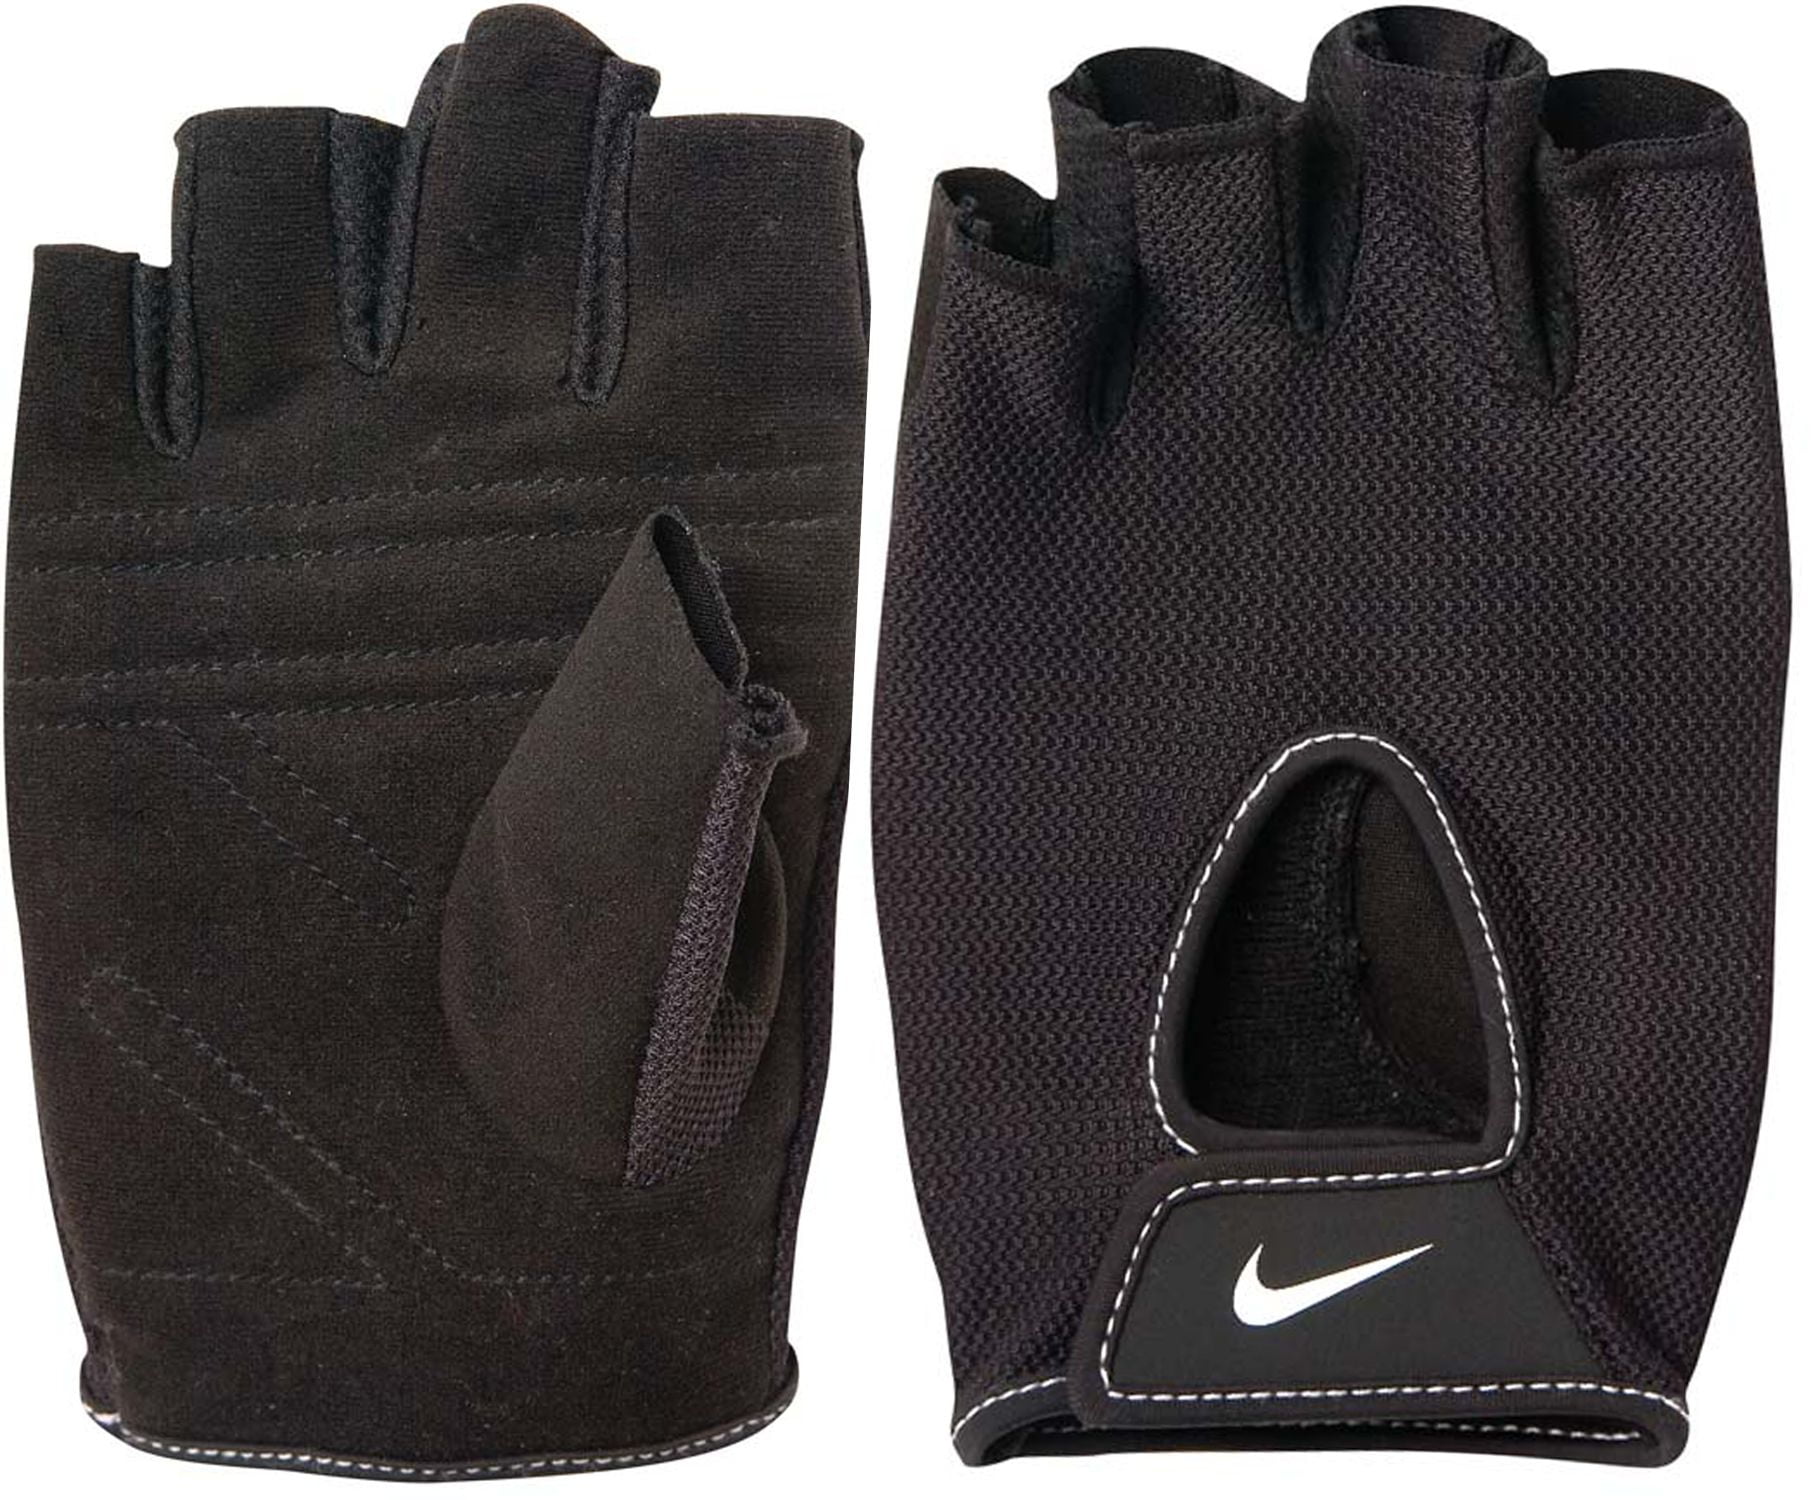 Voorman Mijnwerker milieu Nike Fundamental Training Gloves - Walmart.com